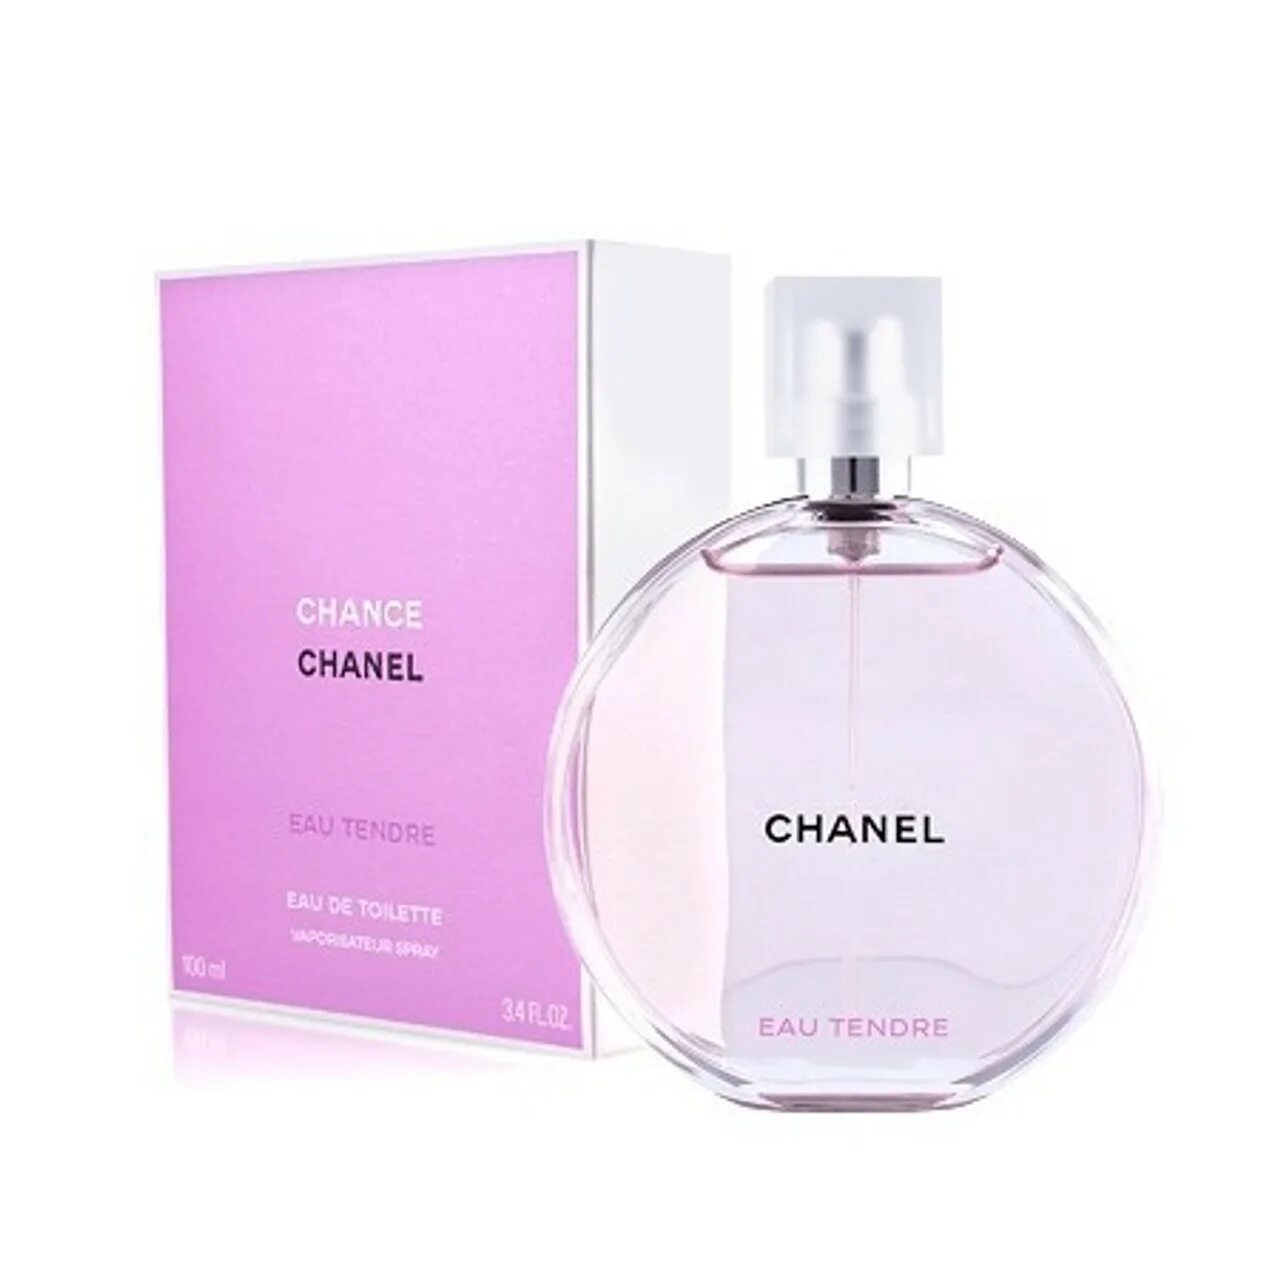 Chanel chance Eau Vive EDT, 100 ml. Chanel chance tender 100 мл. Chanel chance Eau tendre EDT 100 ml. Chanel chance Eau tendre for women 100ml.